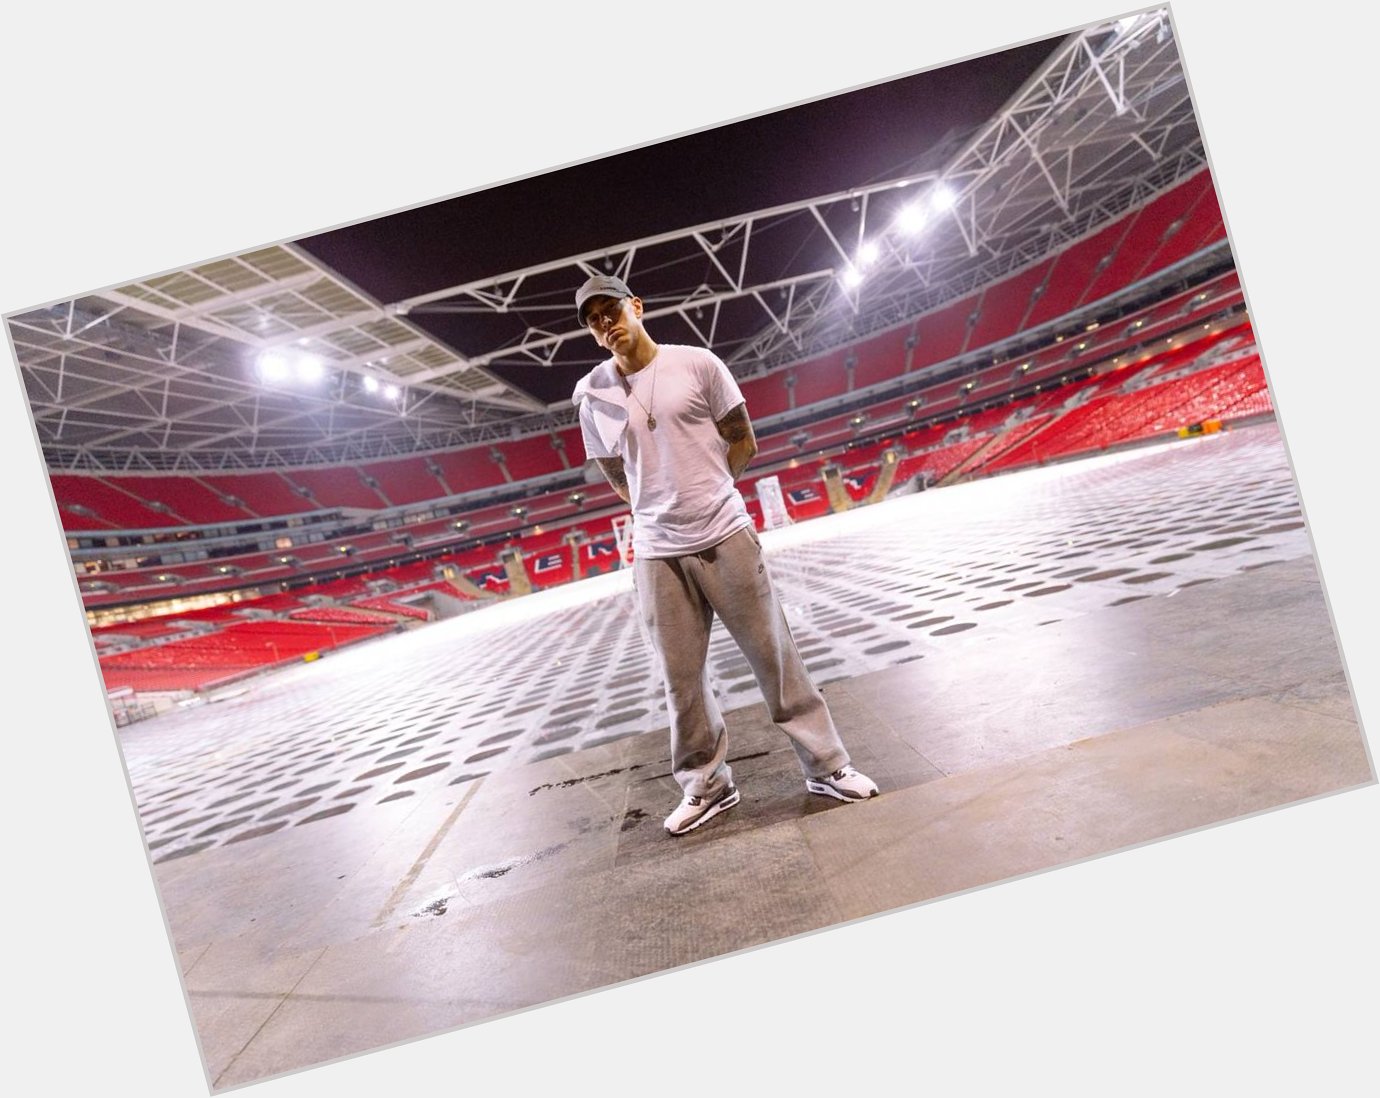 The first rapper EVER to headline Wembley Stadium. Happy birthday  